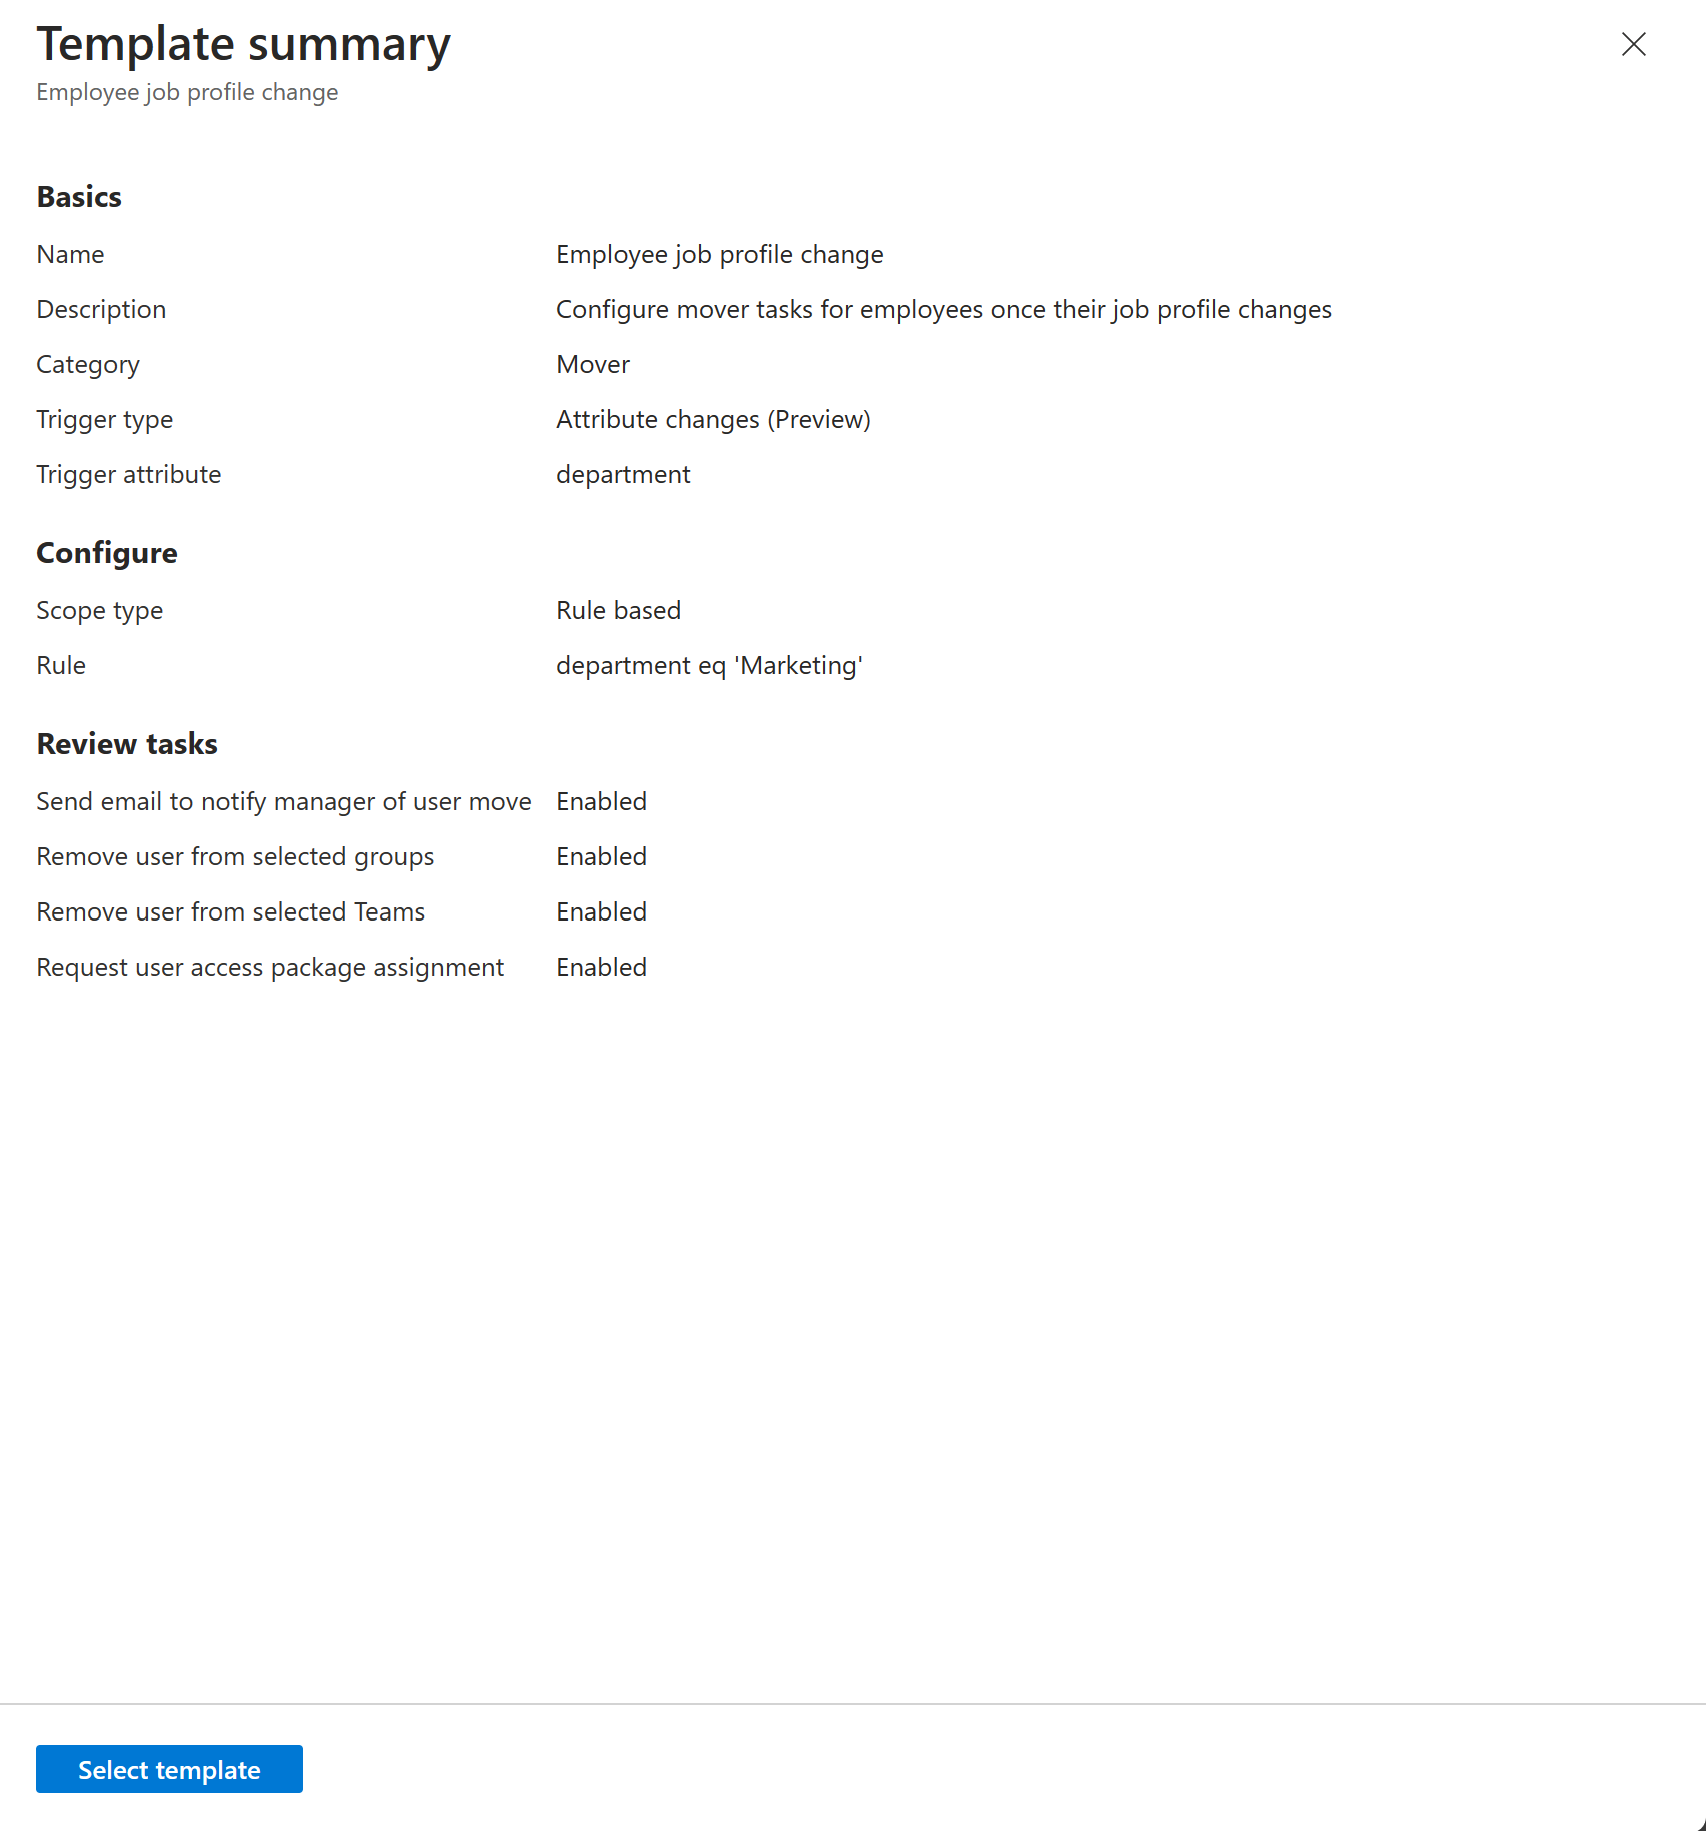 Cuplikan layar templat perubahan profil pekerjaan Karyawan.